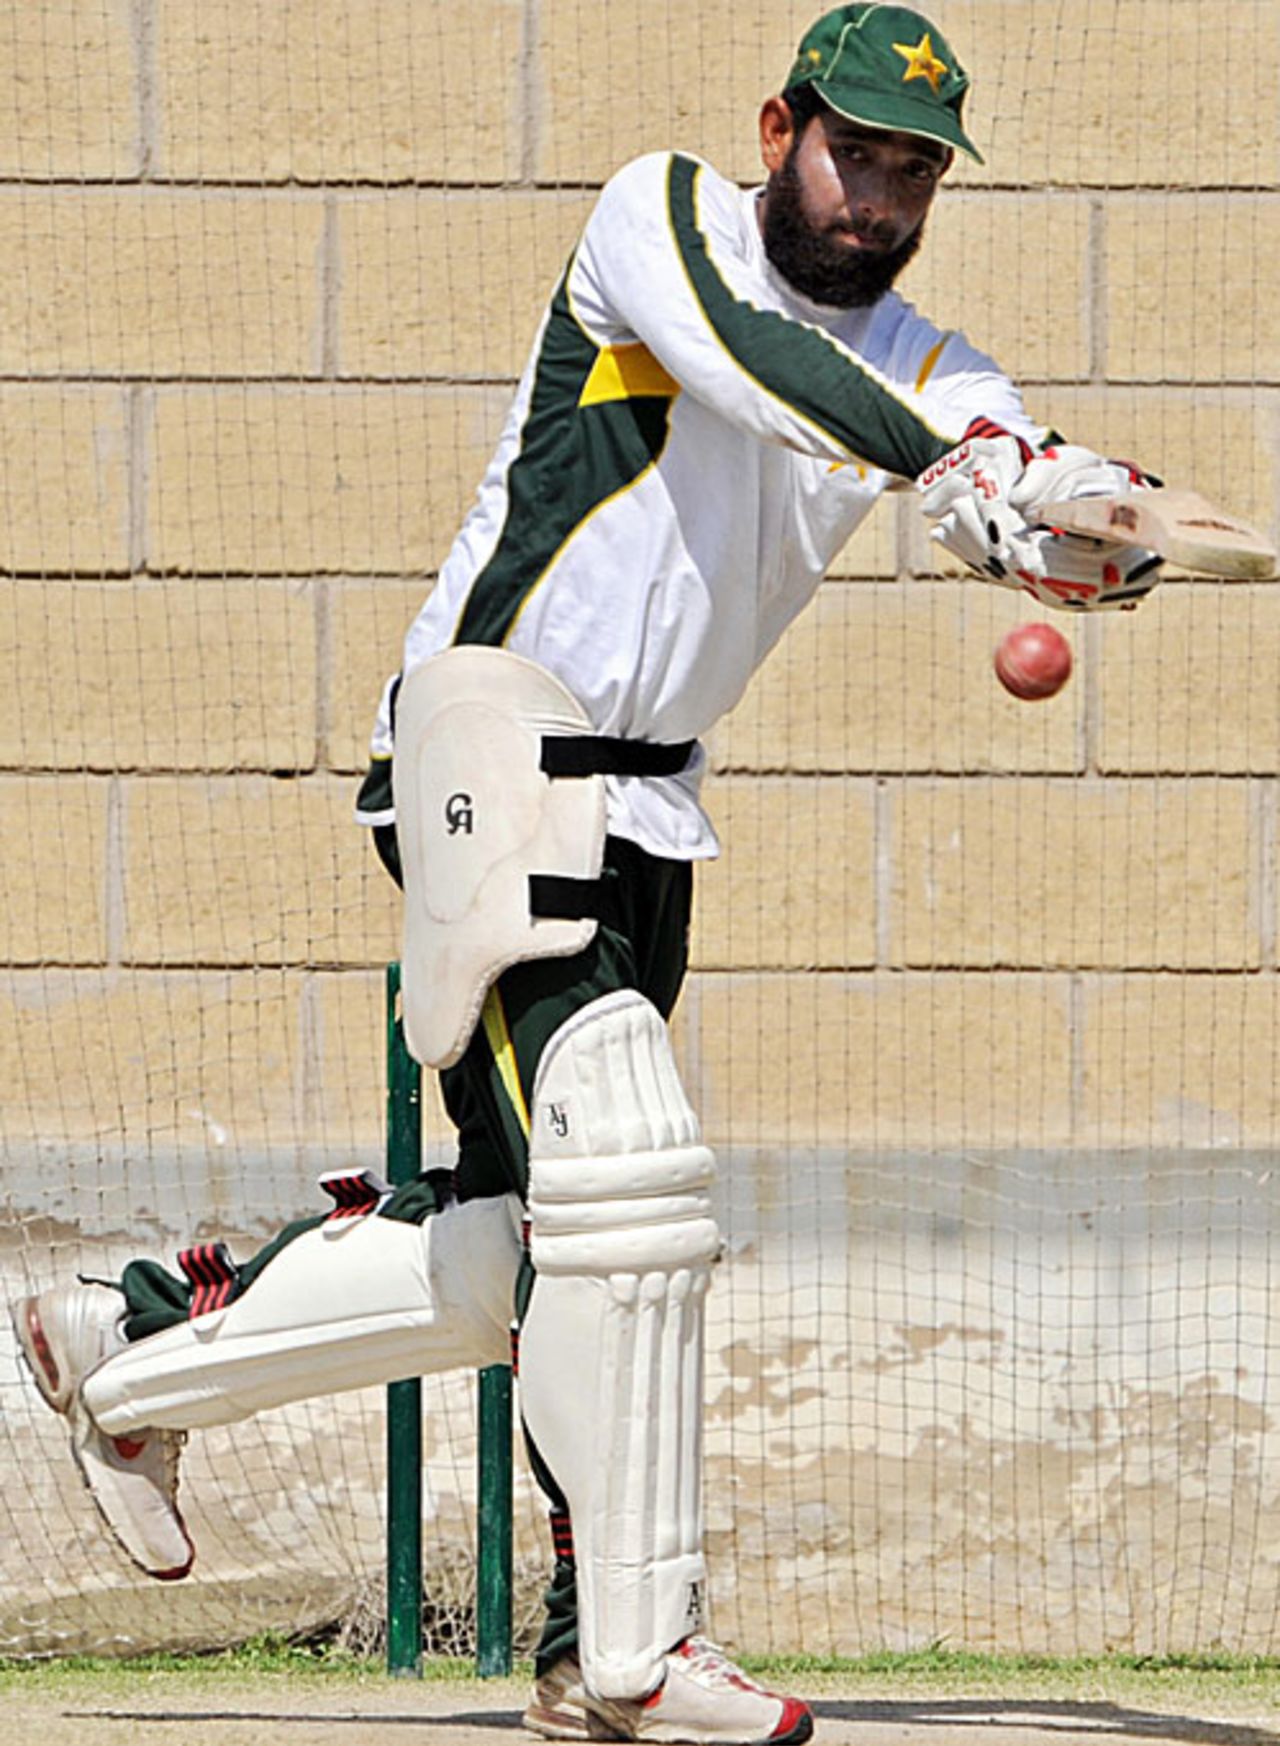 Asim Kamal opens up at the nets, Karachi, February 20, 2009